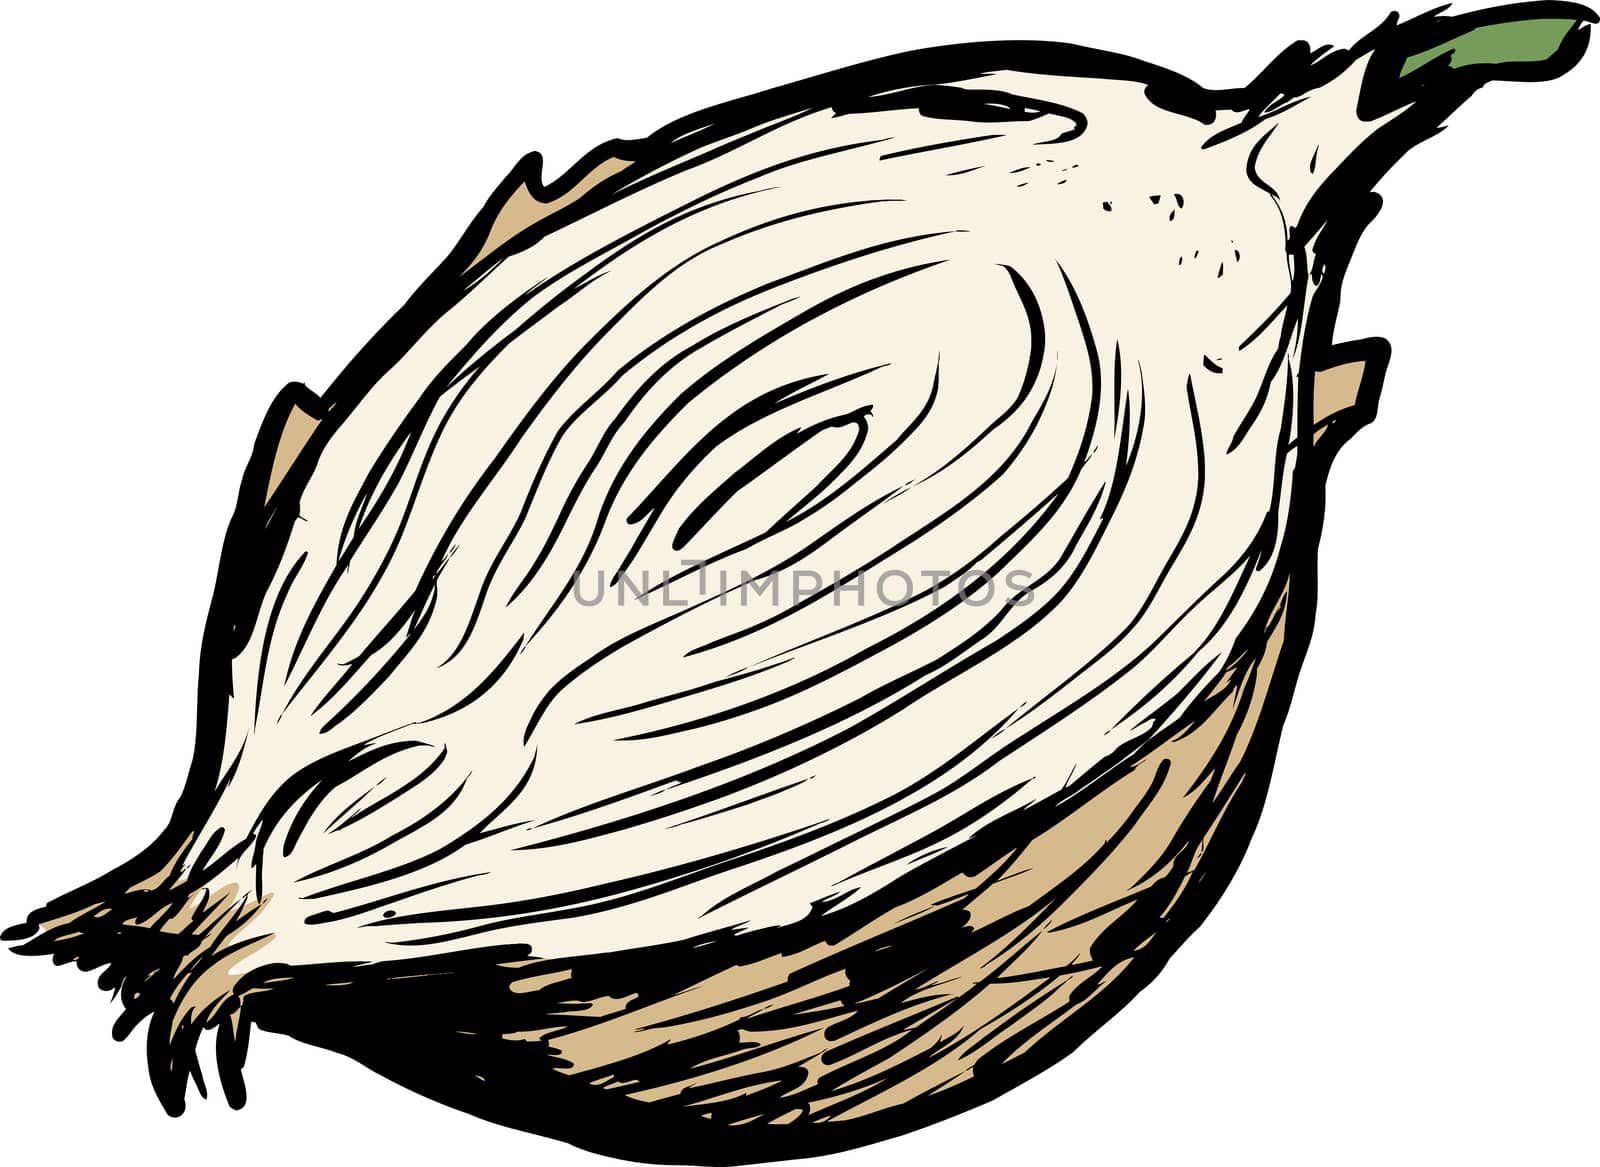 Cut yellow raw onion illustration by TheBlackRhino